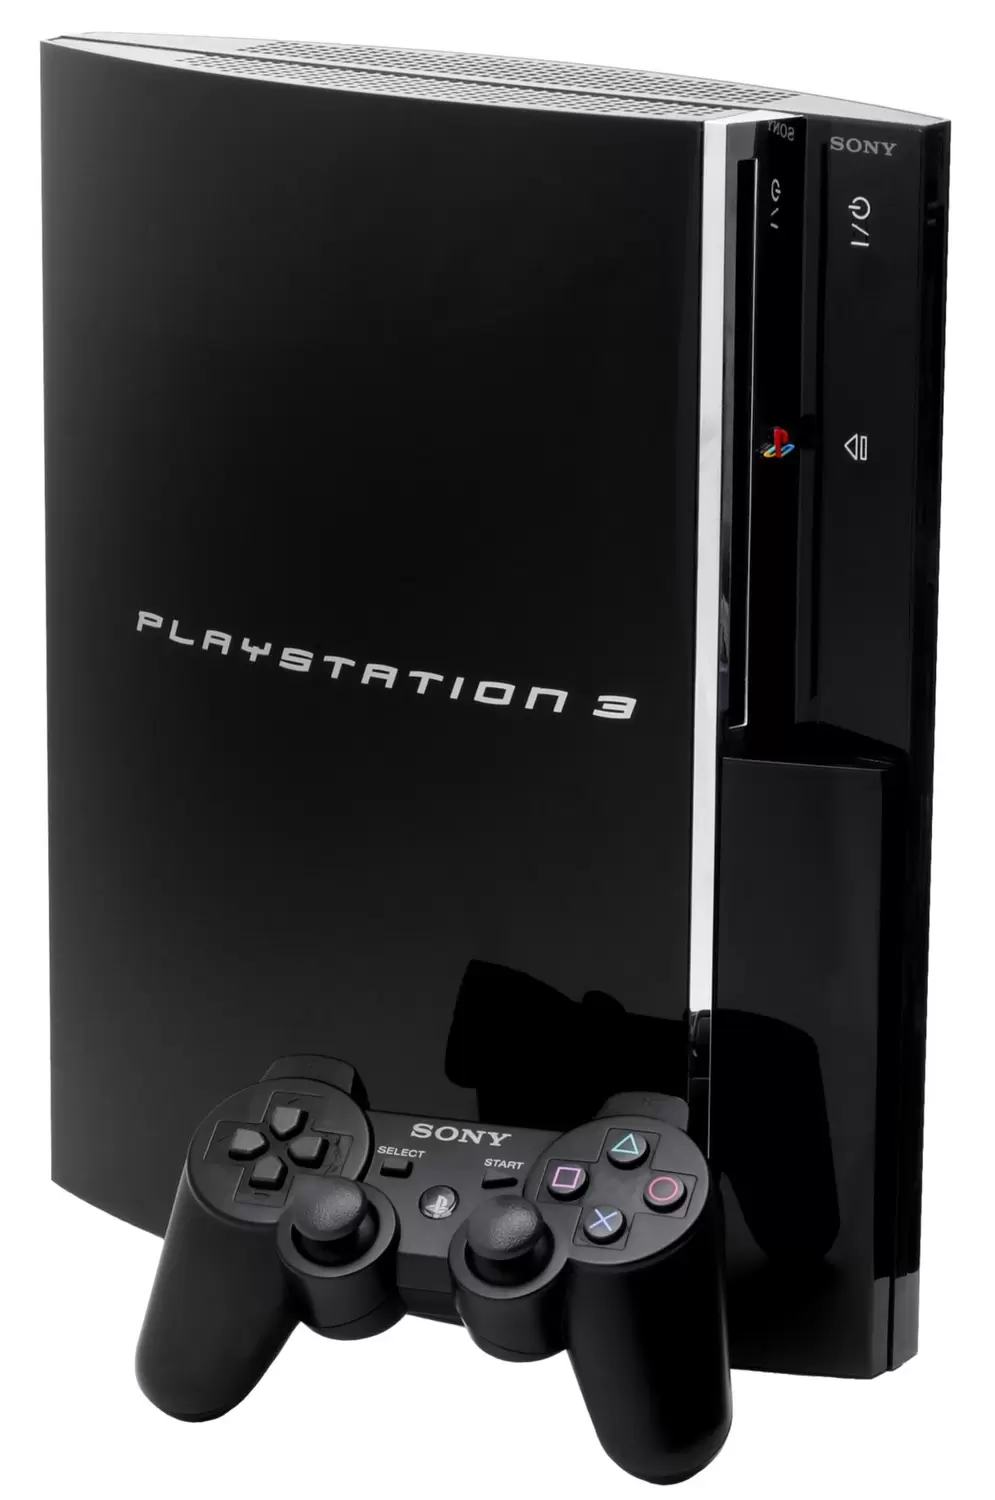 Matériel PlayStation 3 - PlayStation 3 Clear Black